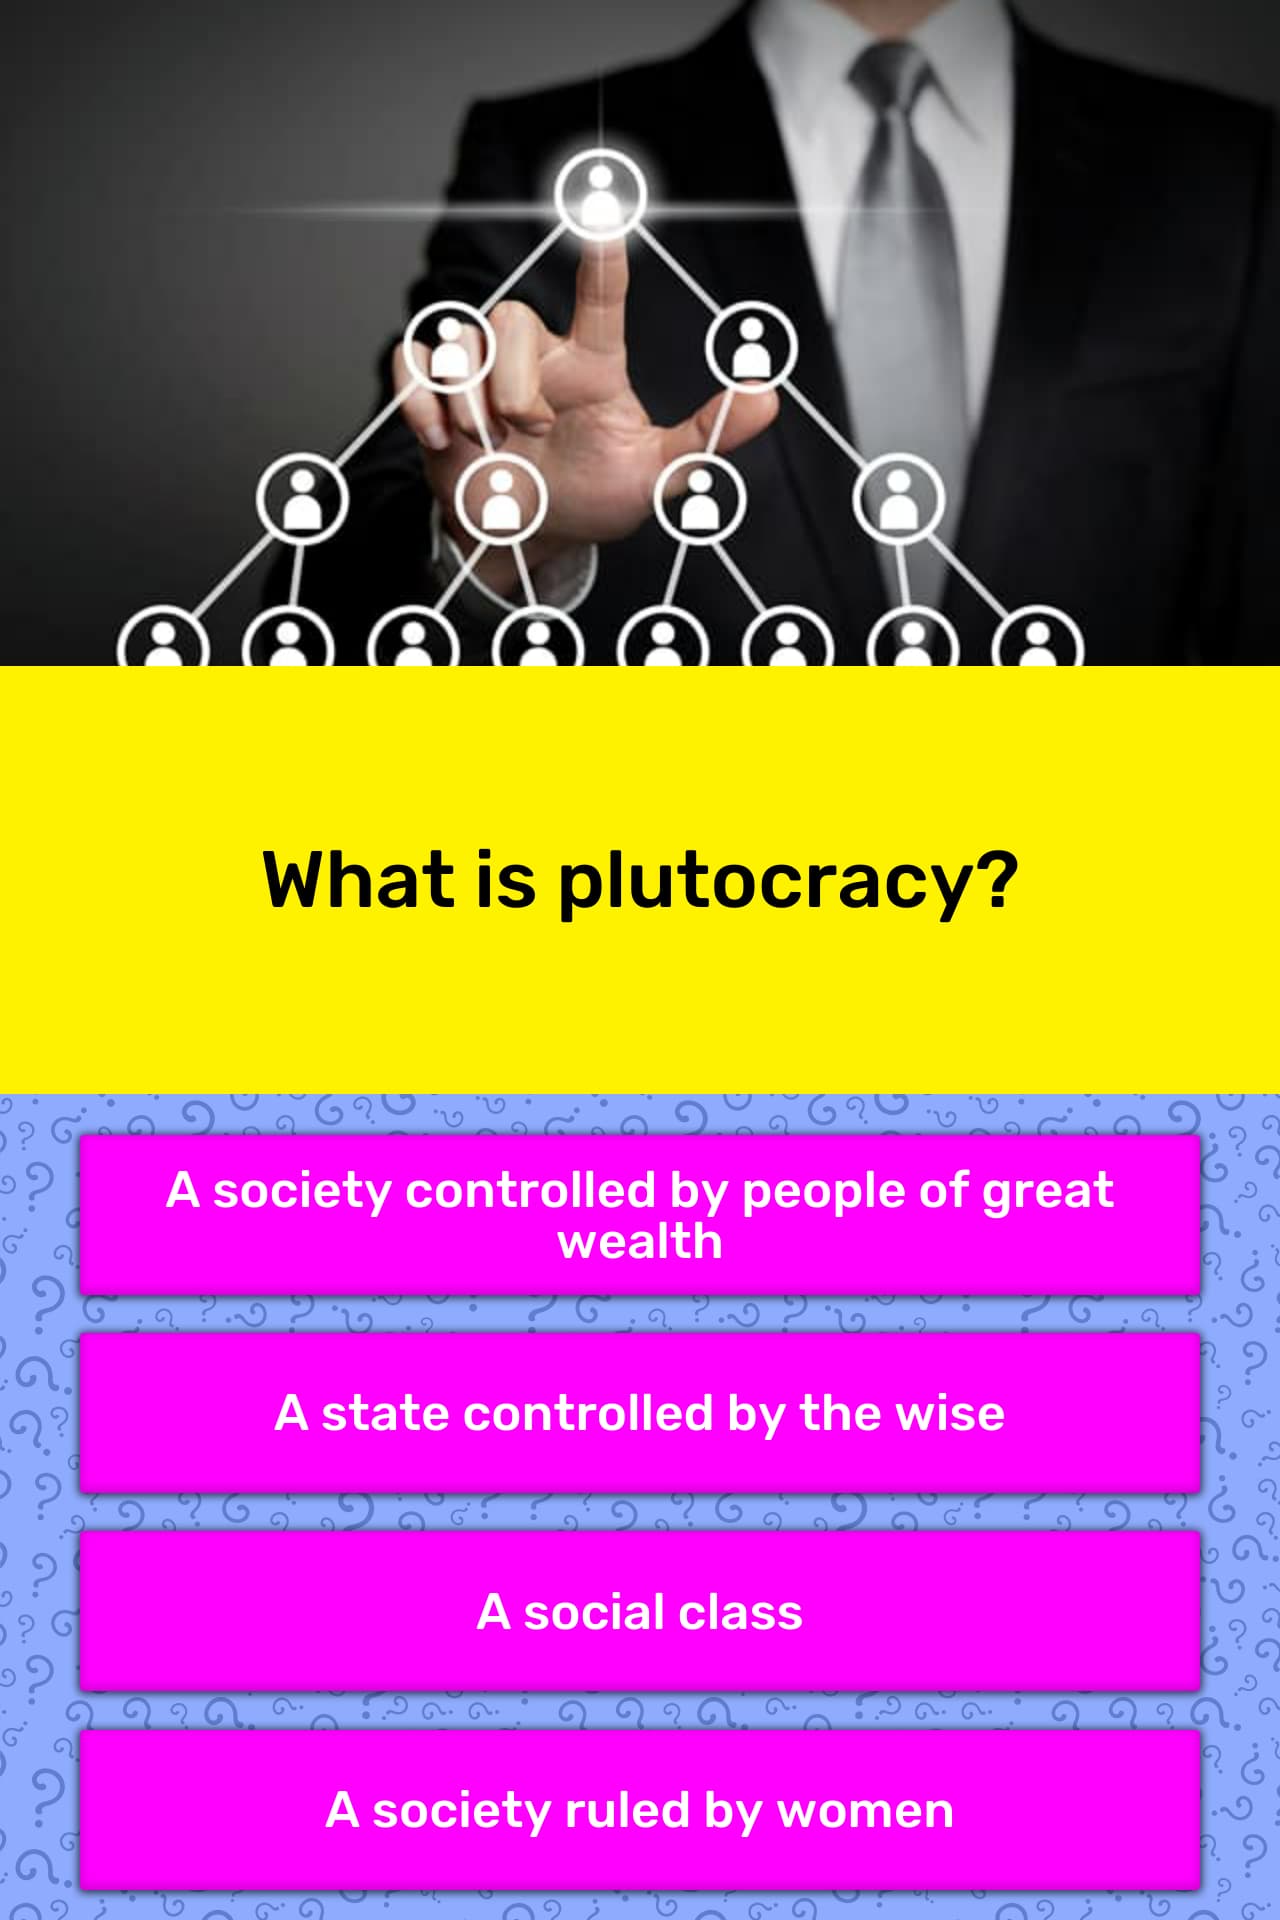 plutocracy definition